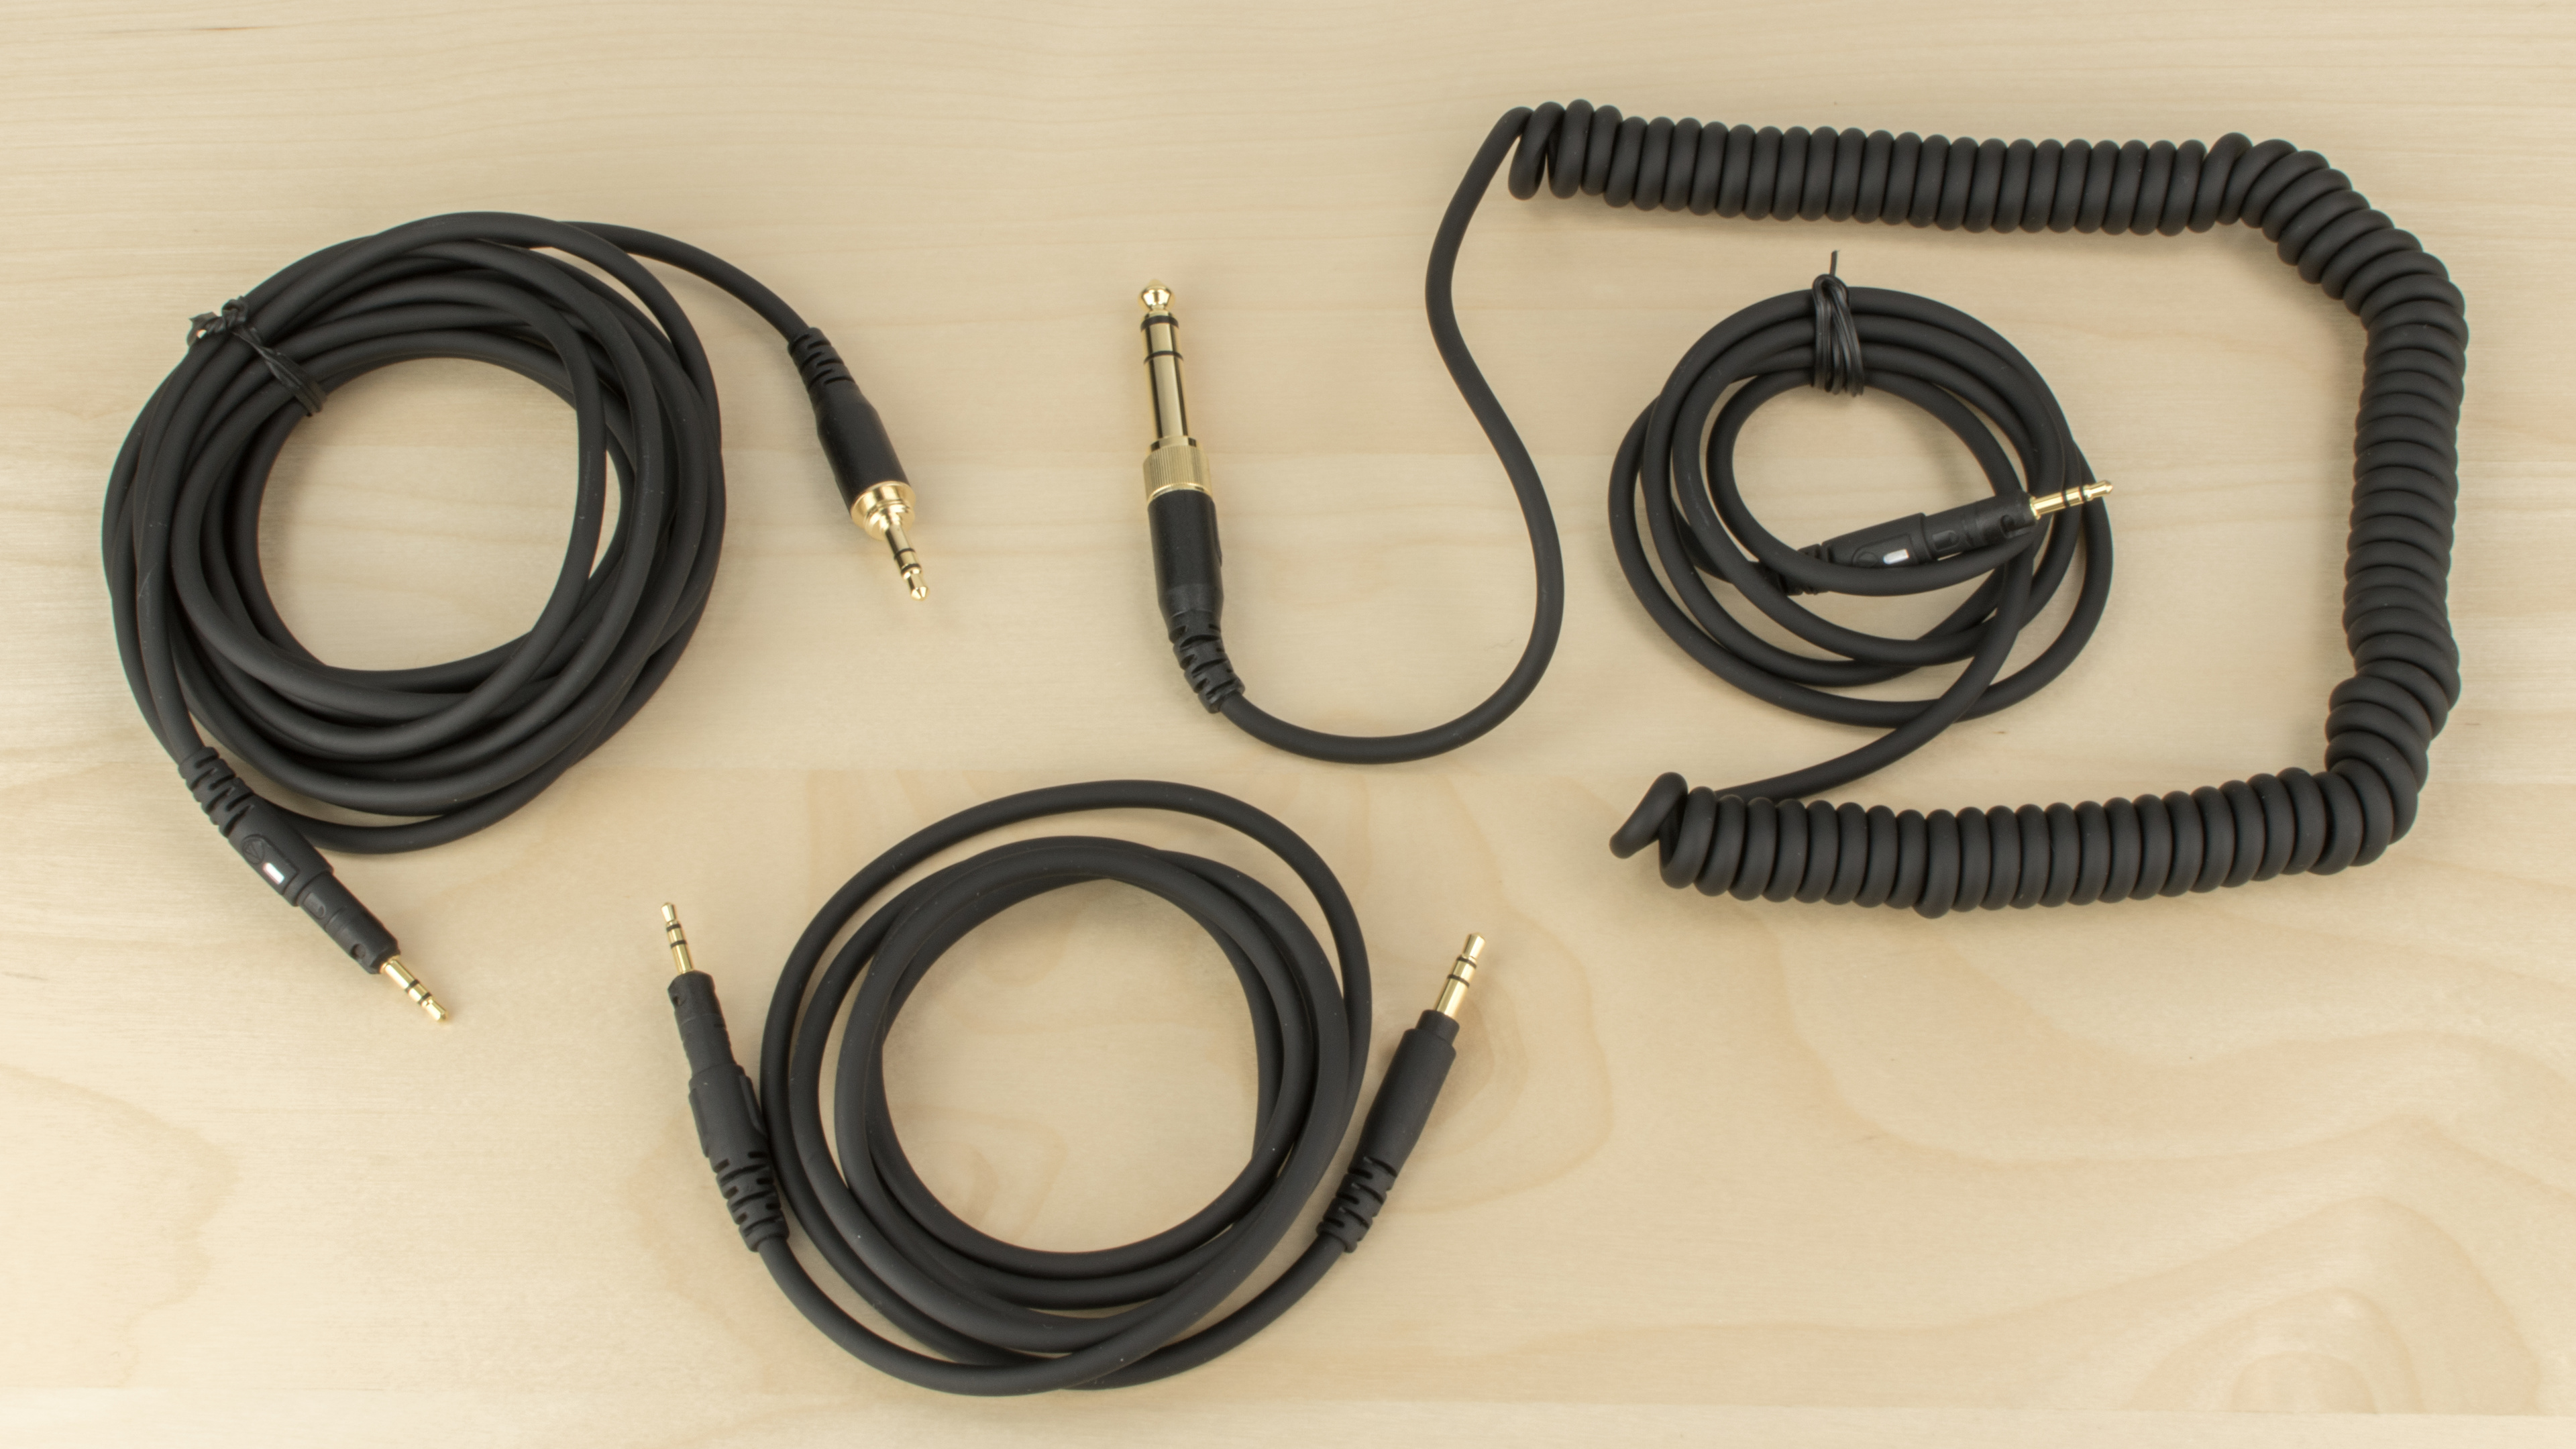 The Audio-Technica M50x's three audio cables